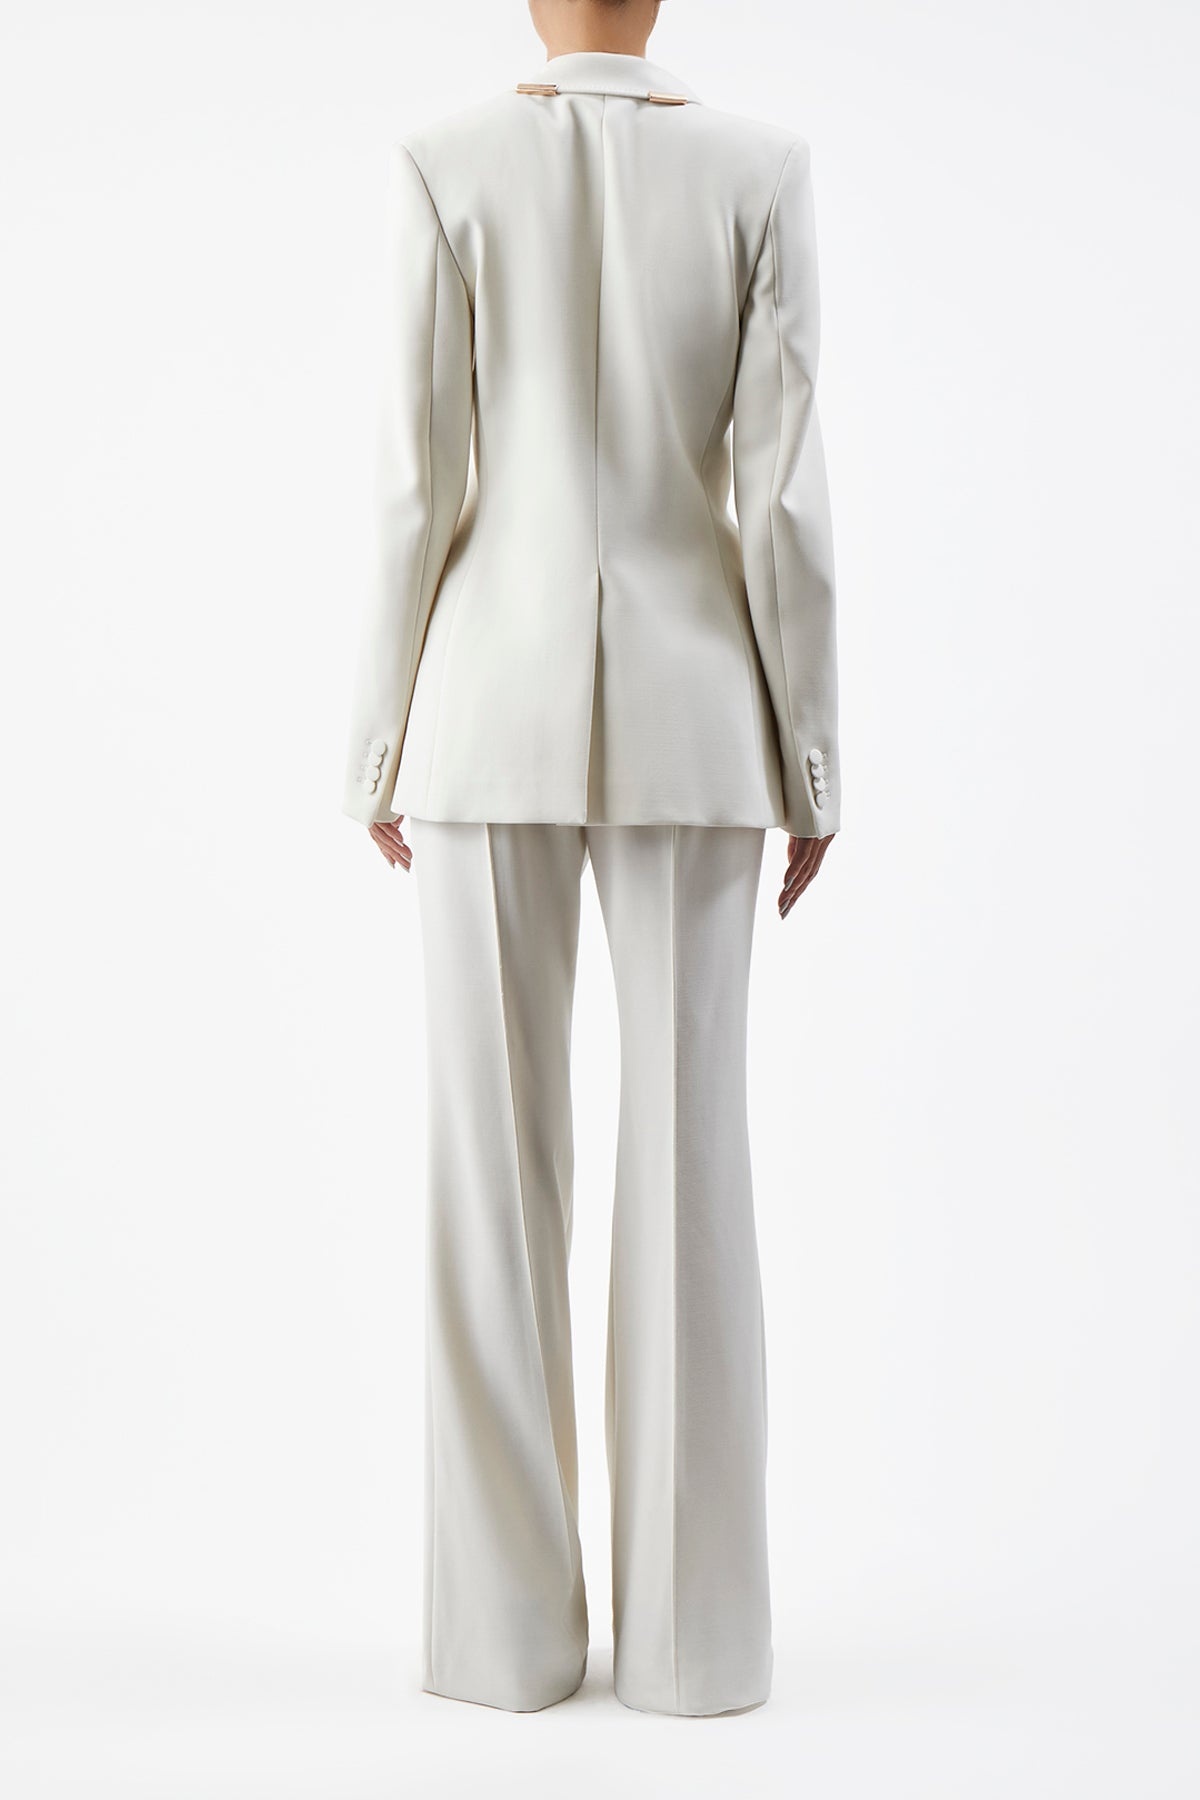 Leiva Blazer in Ivory Sportswear Wool with Gold Bars - 5